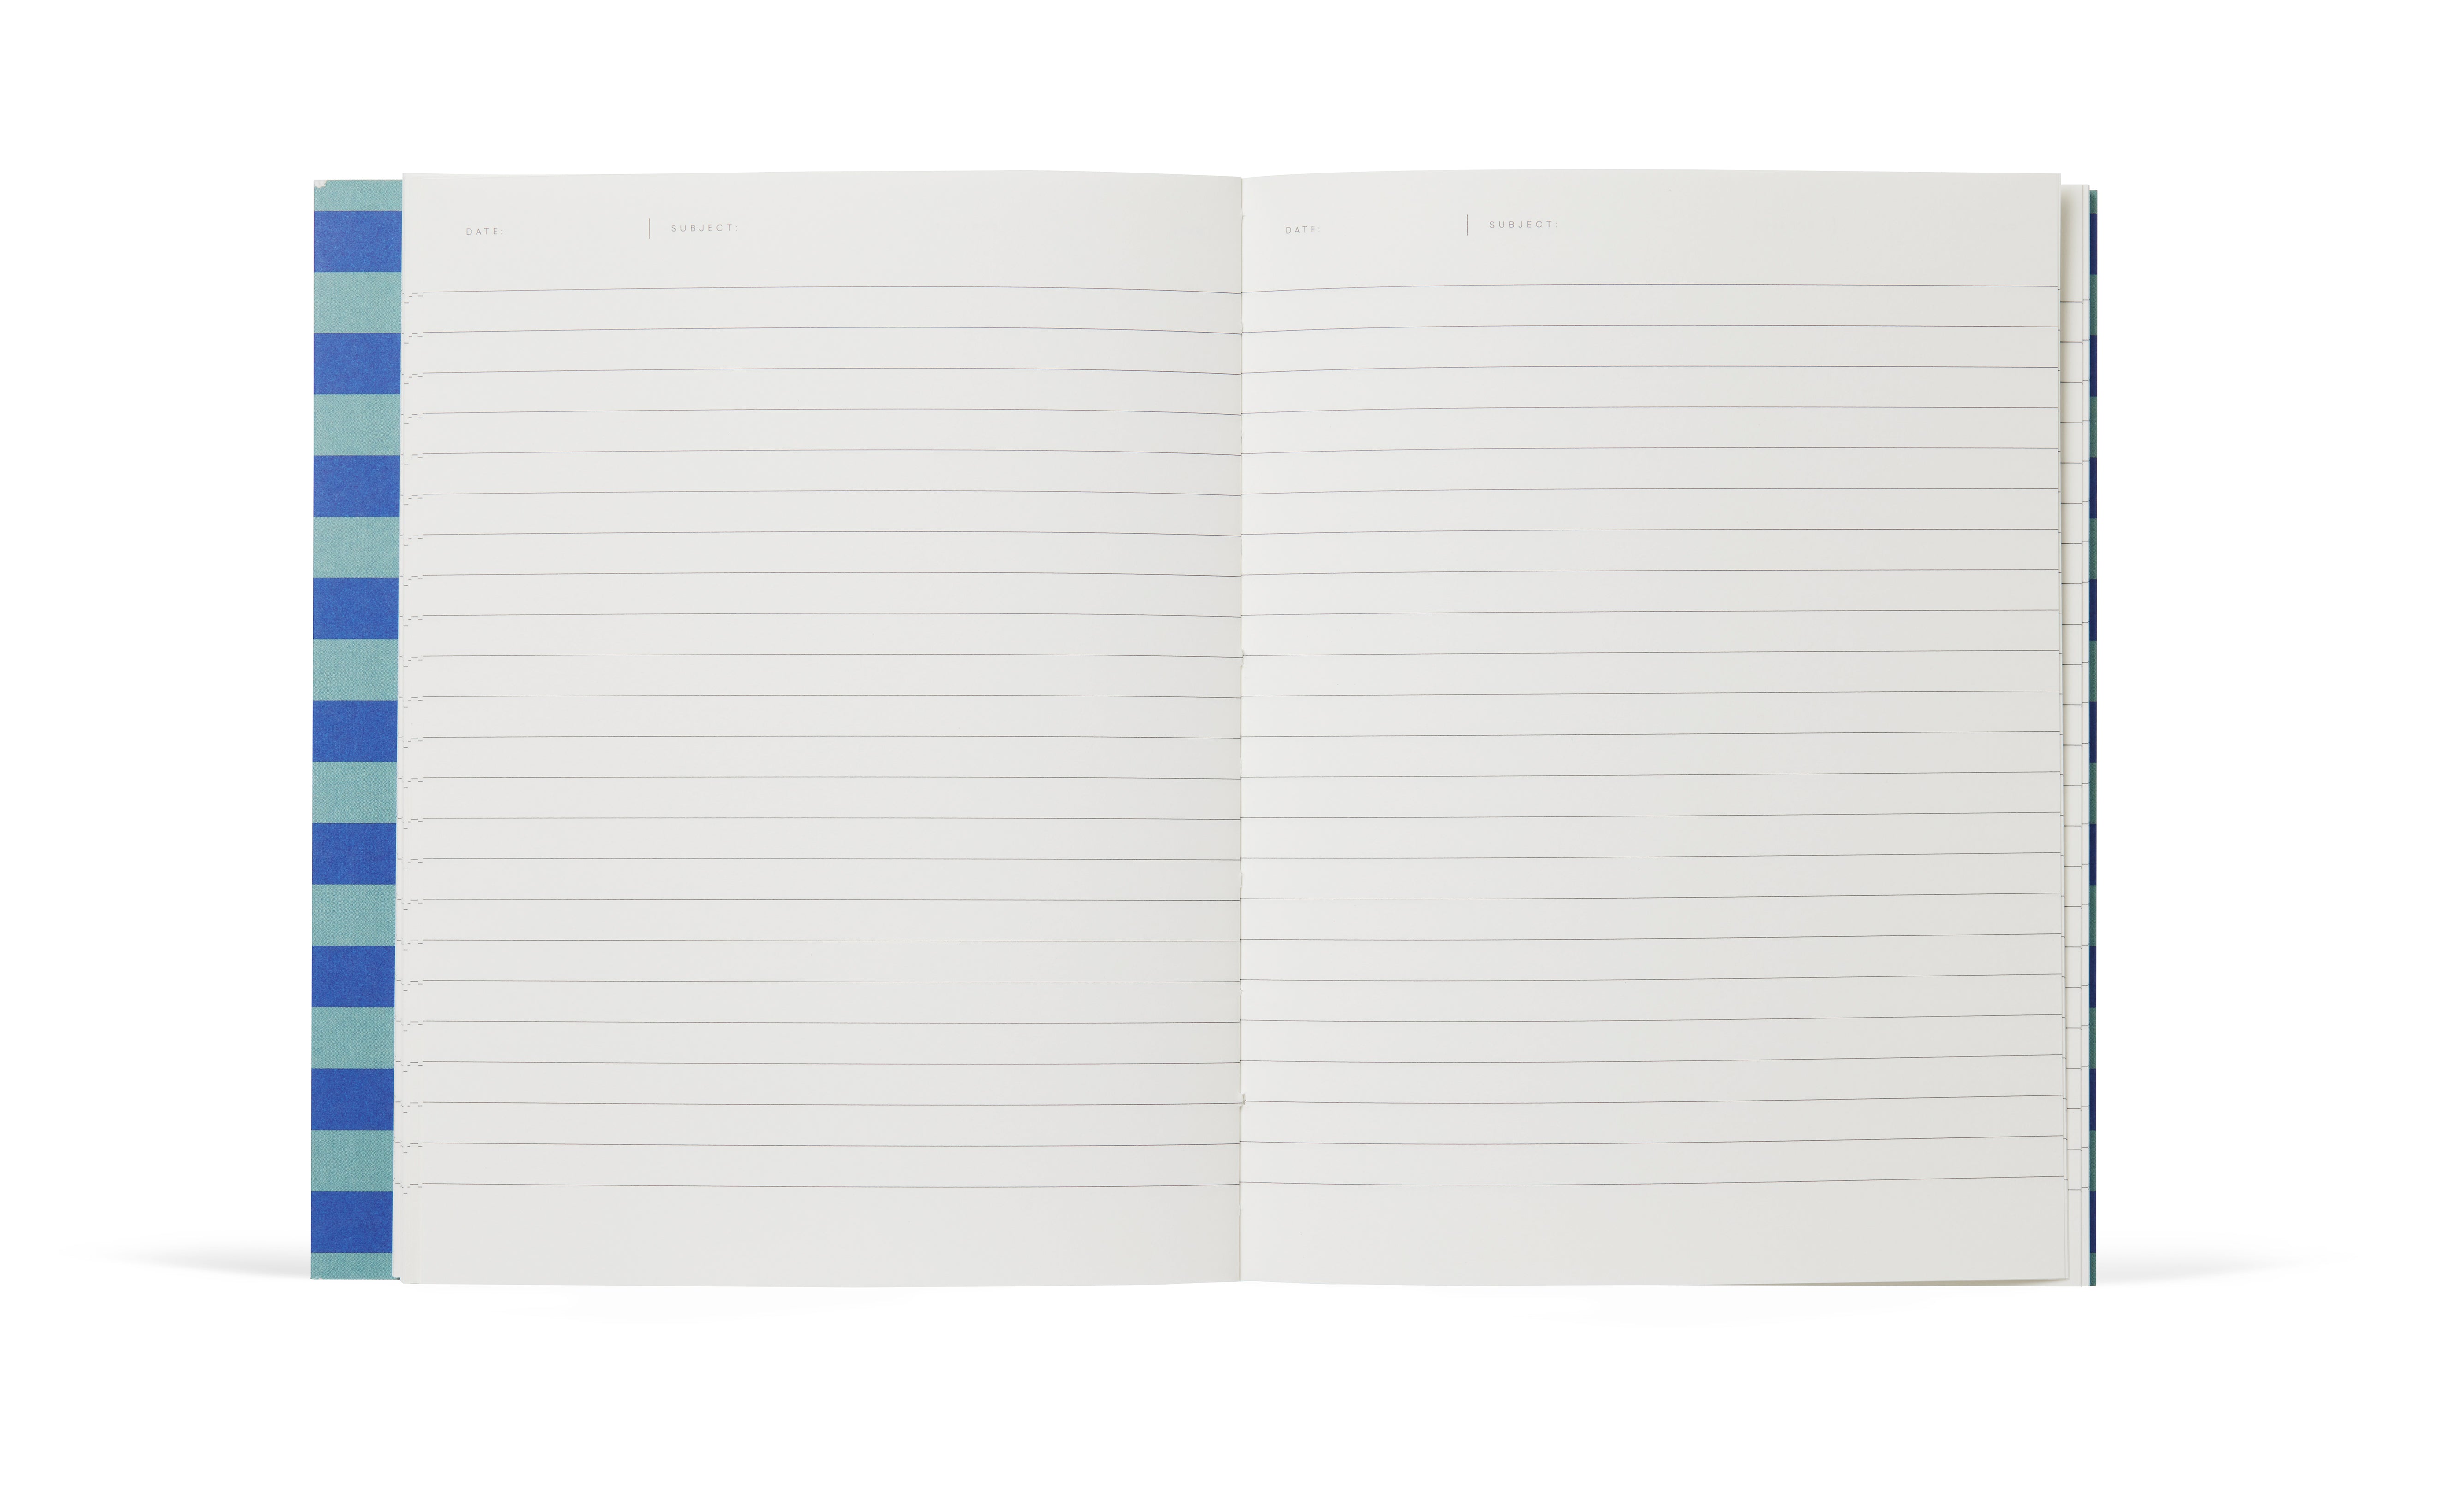 Notem UMA Flat Lay Notebook - Medium - Blue Stripe